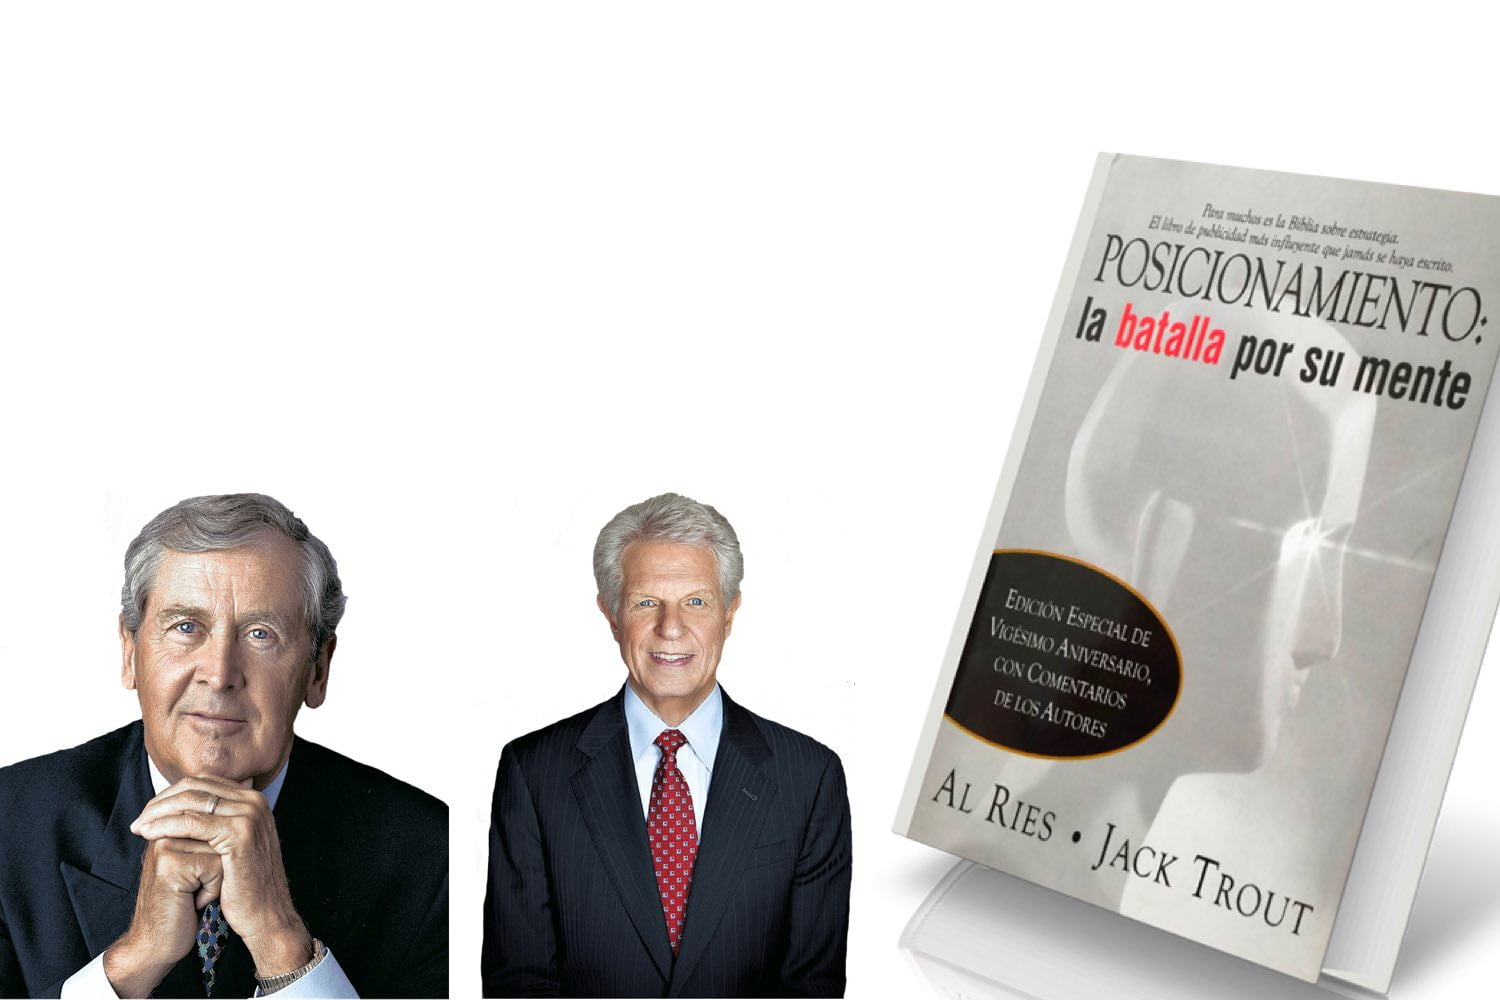 MBA Personal Libro Resumen Completo Español - Marketing Branding